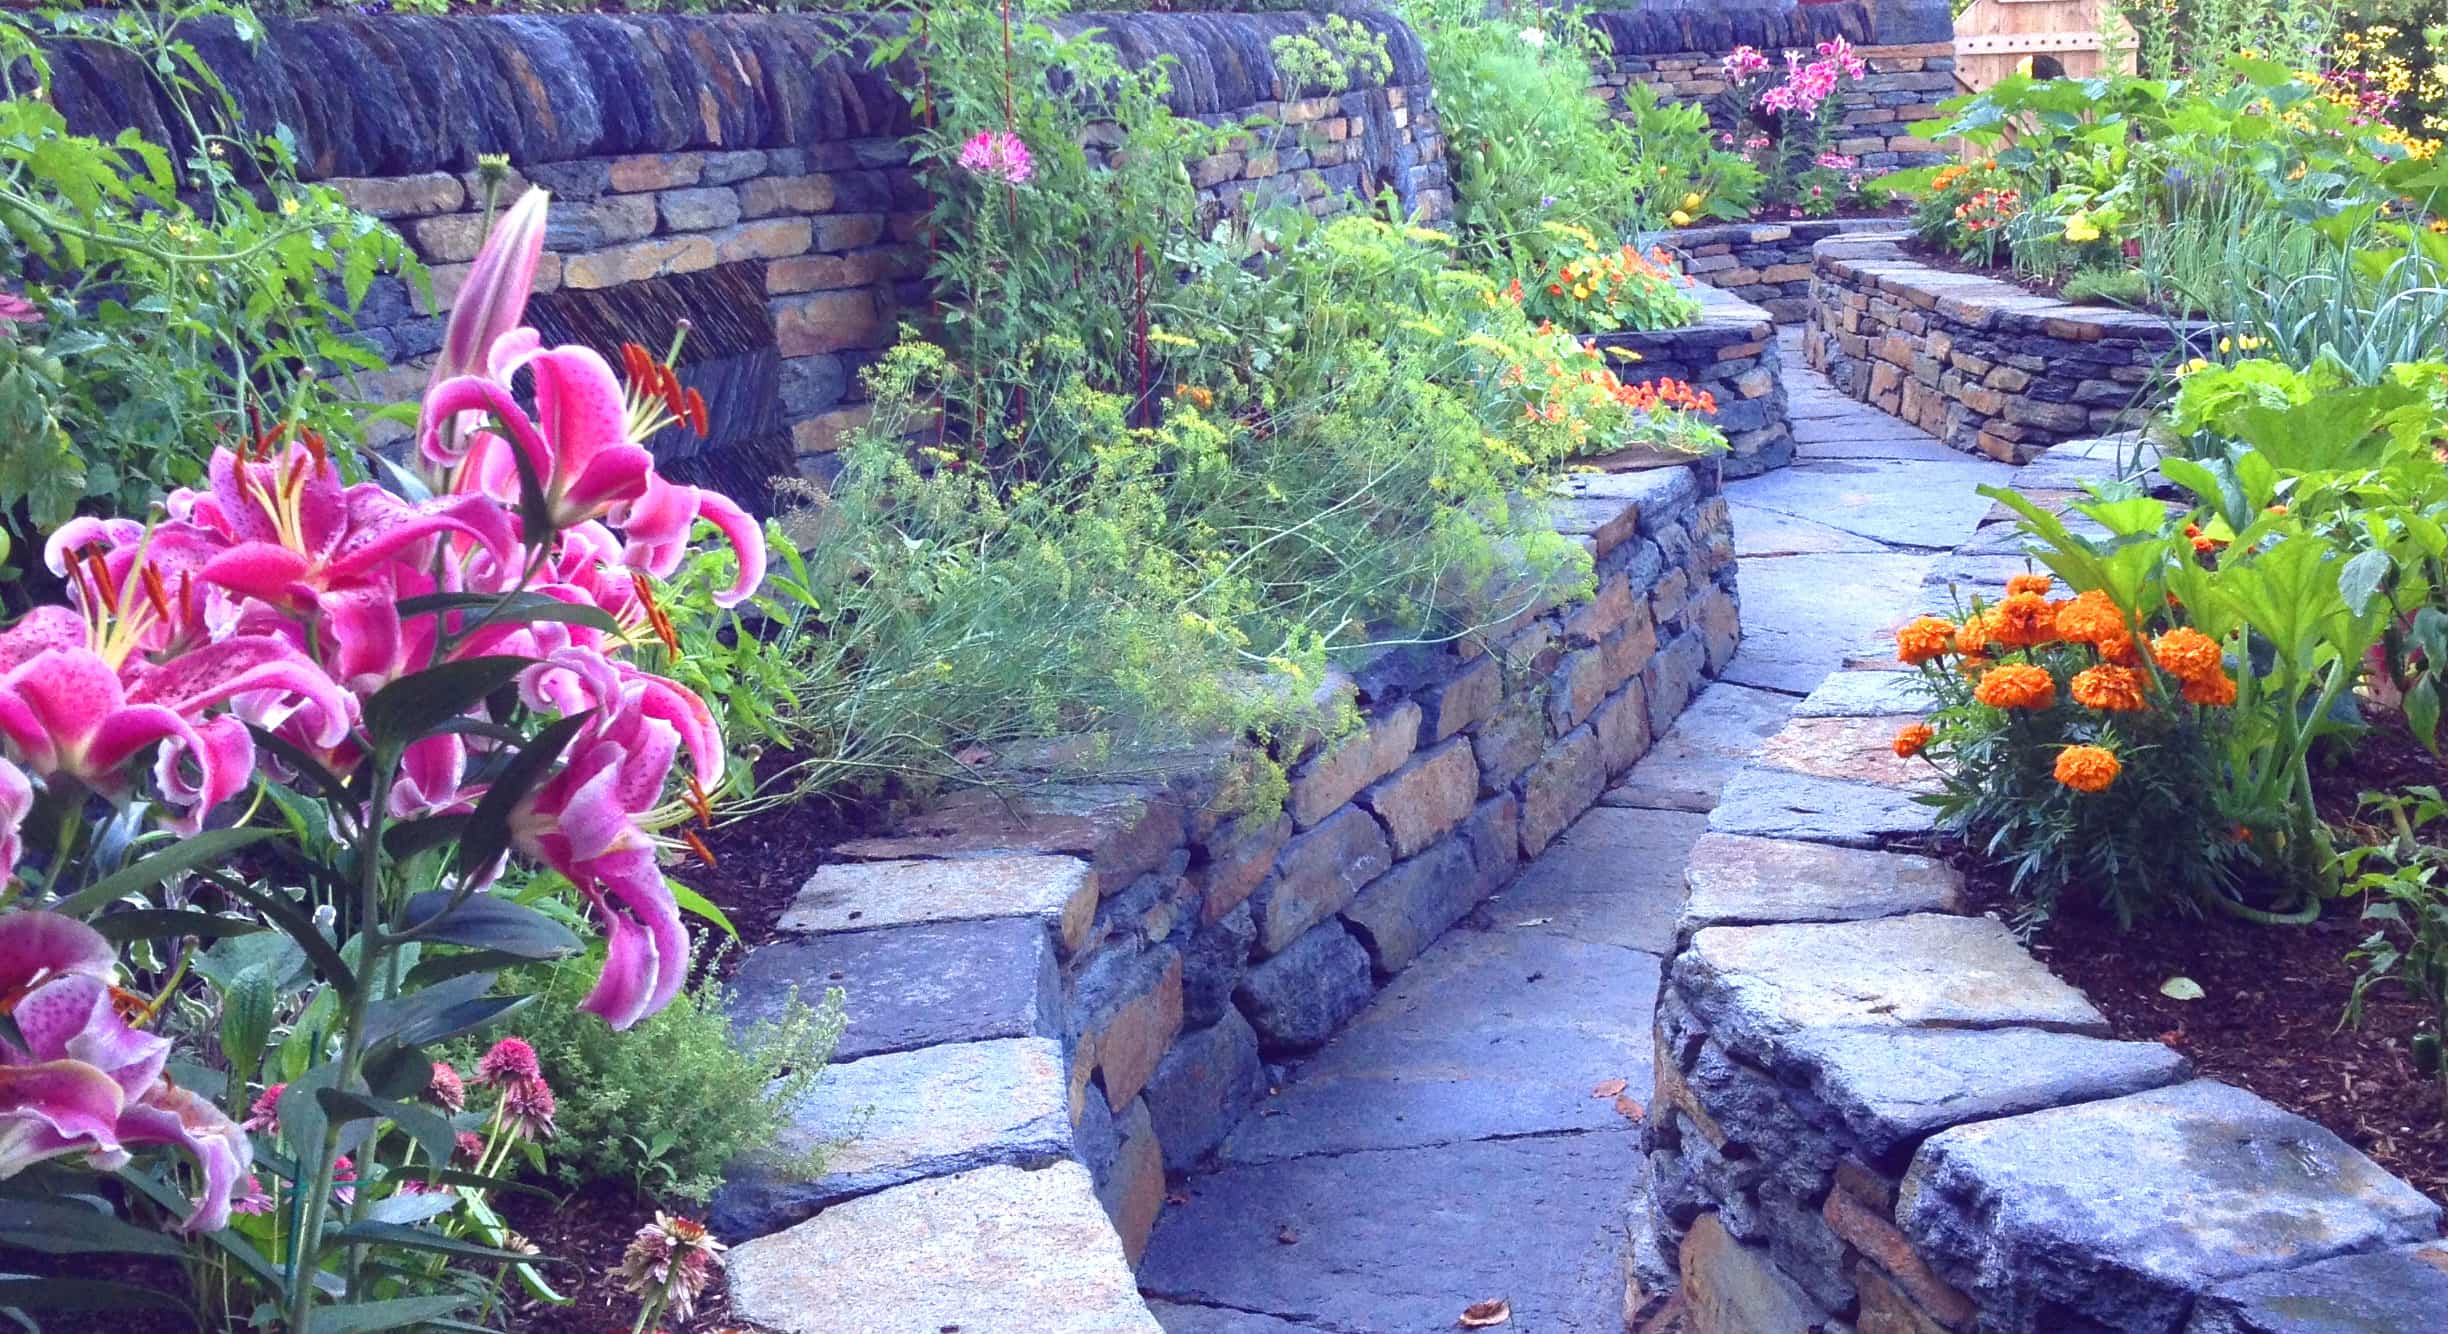 Raised stone garden beds, stone slab walkways and patios,